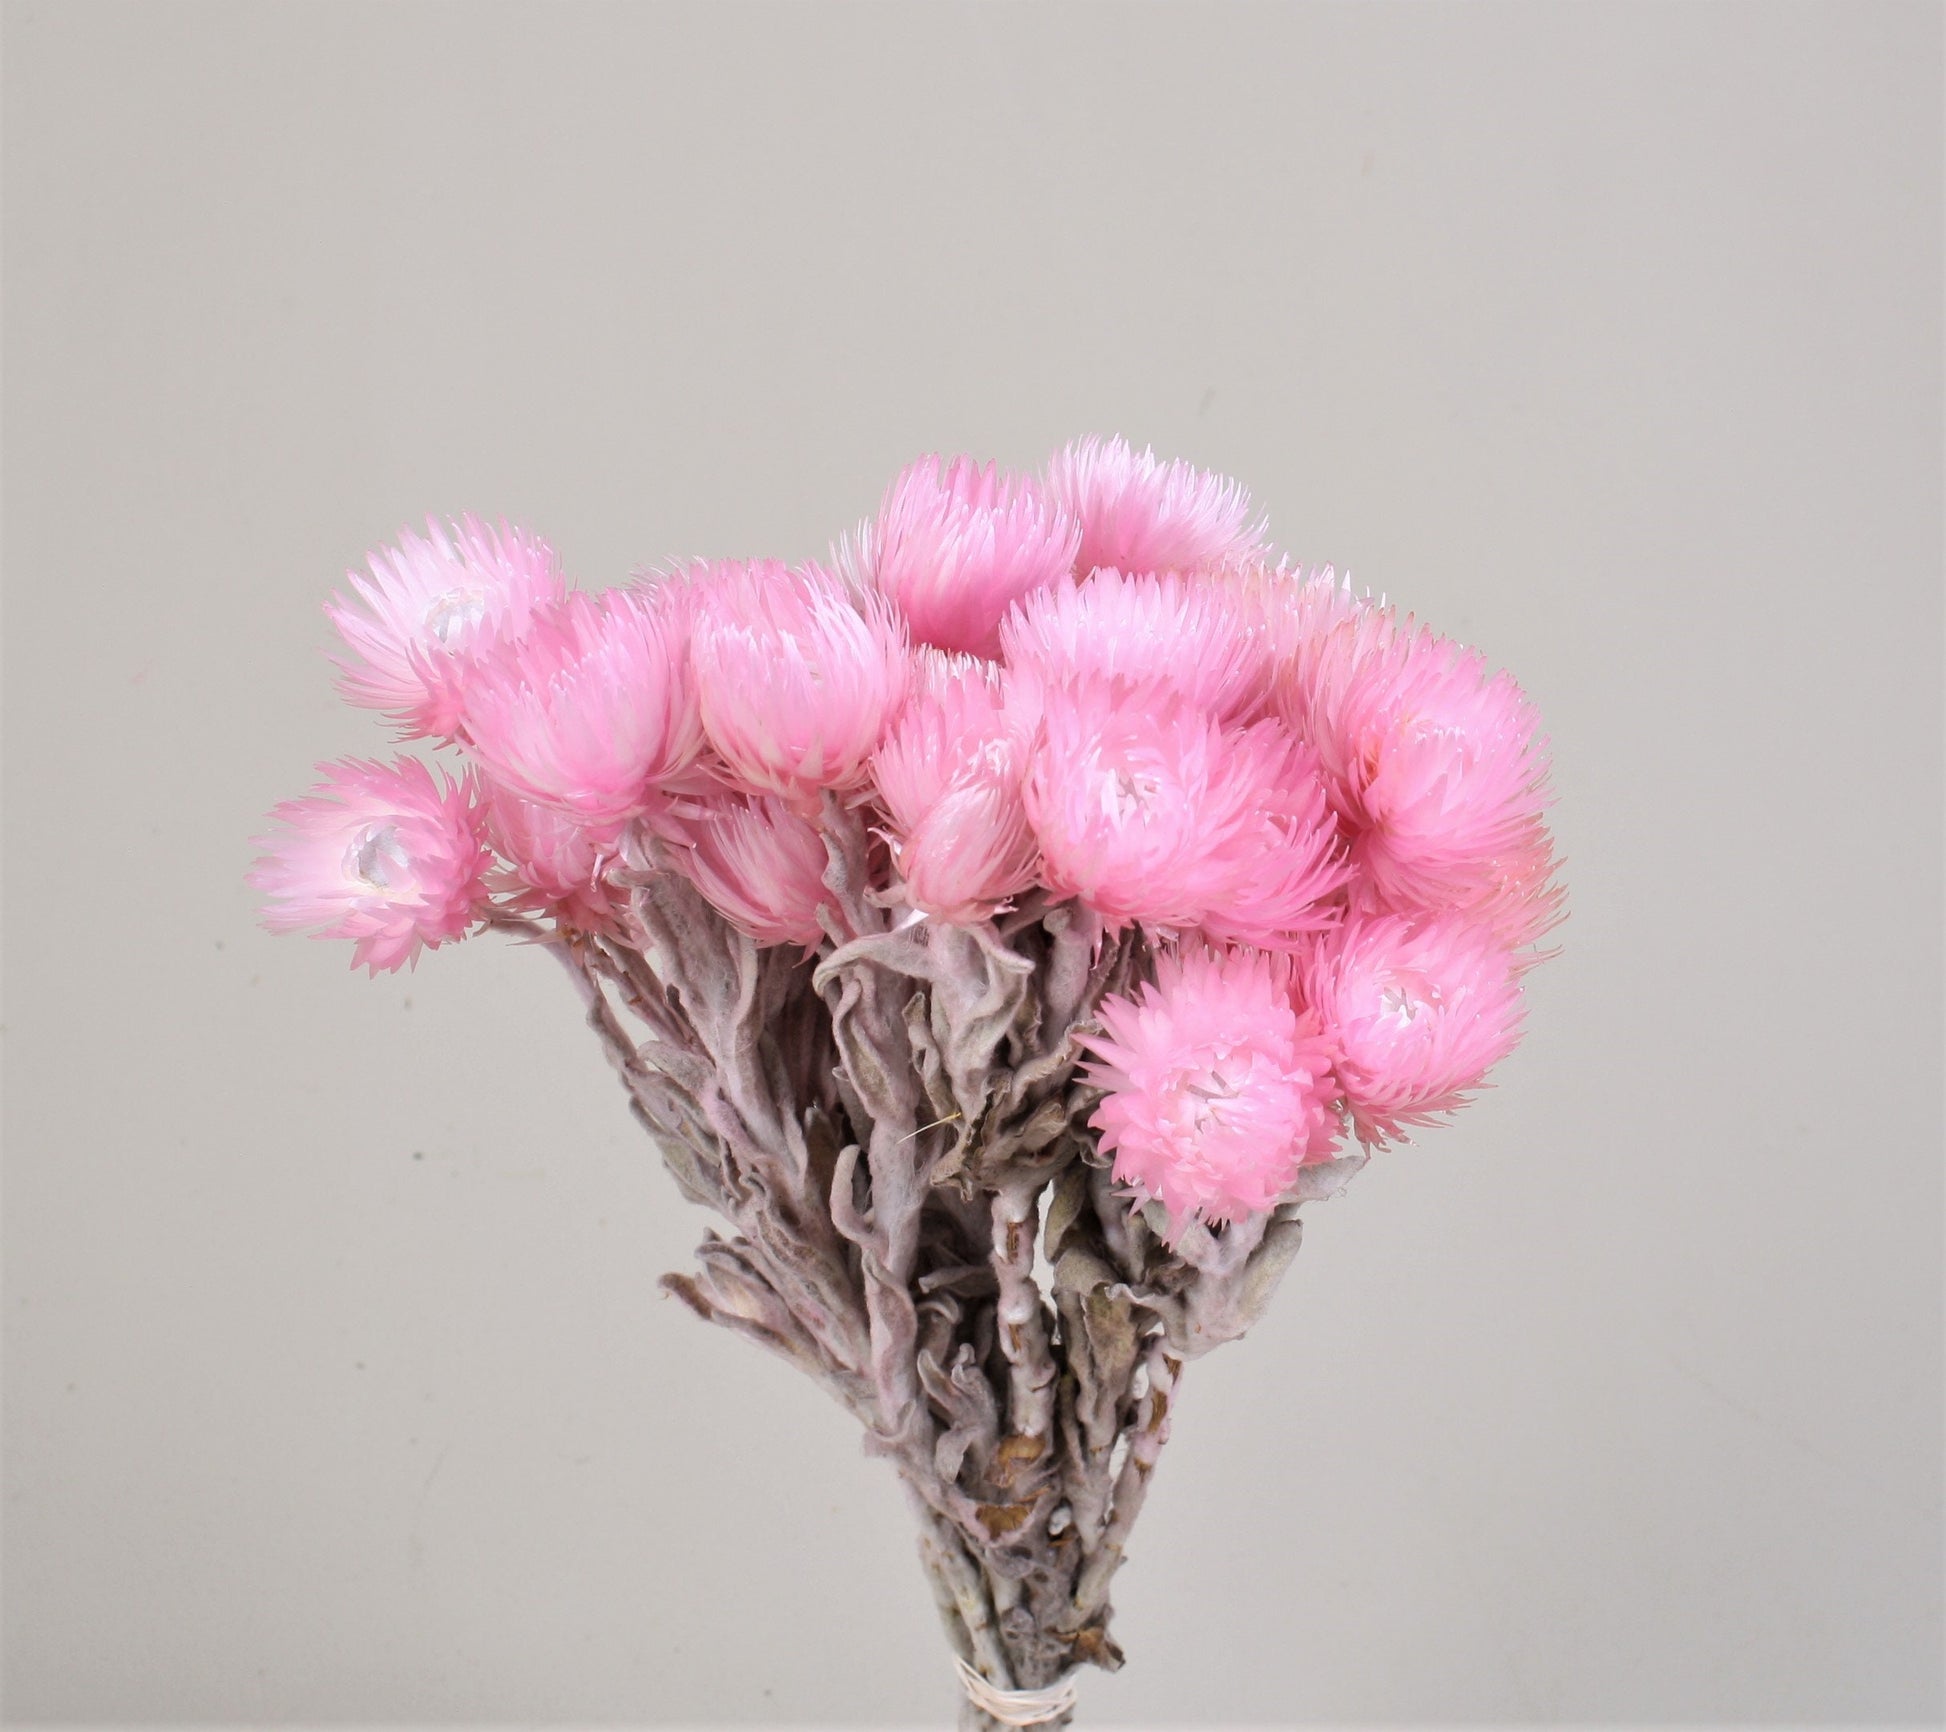 Helichrysum Vestitum capblumen baby pink color, 3oz bunch, rustic decoration